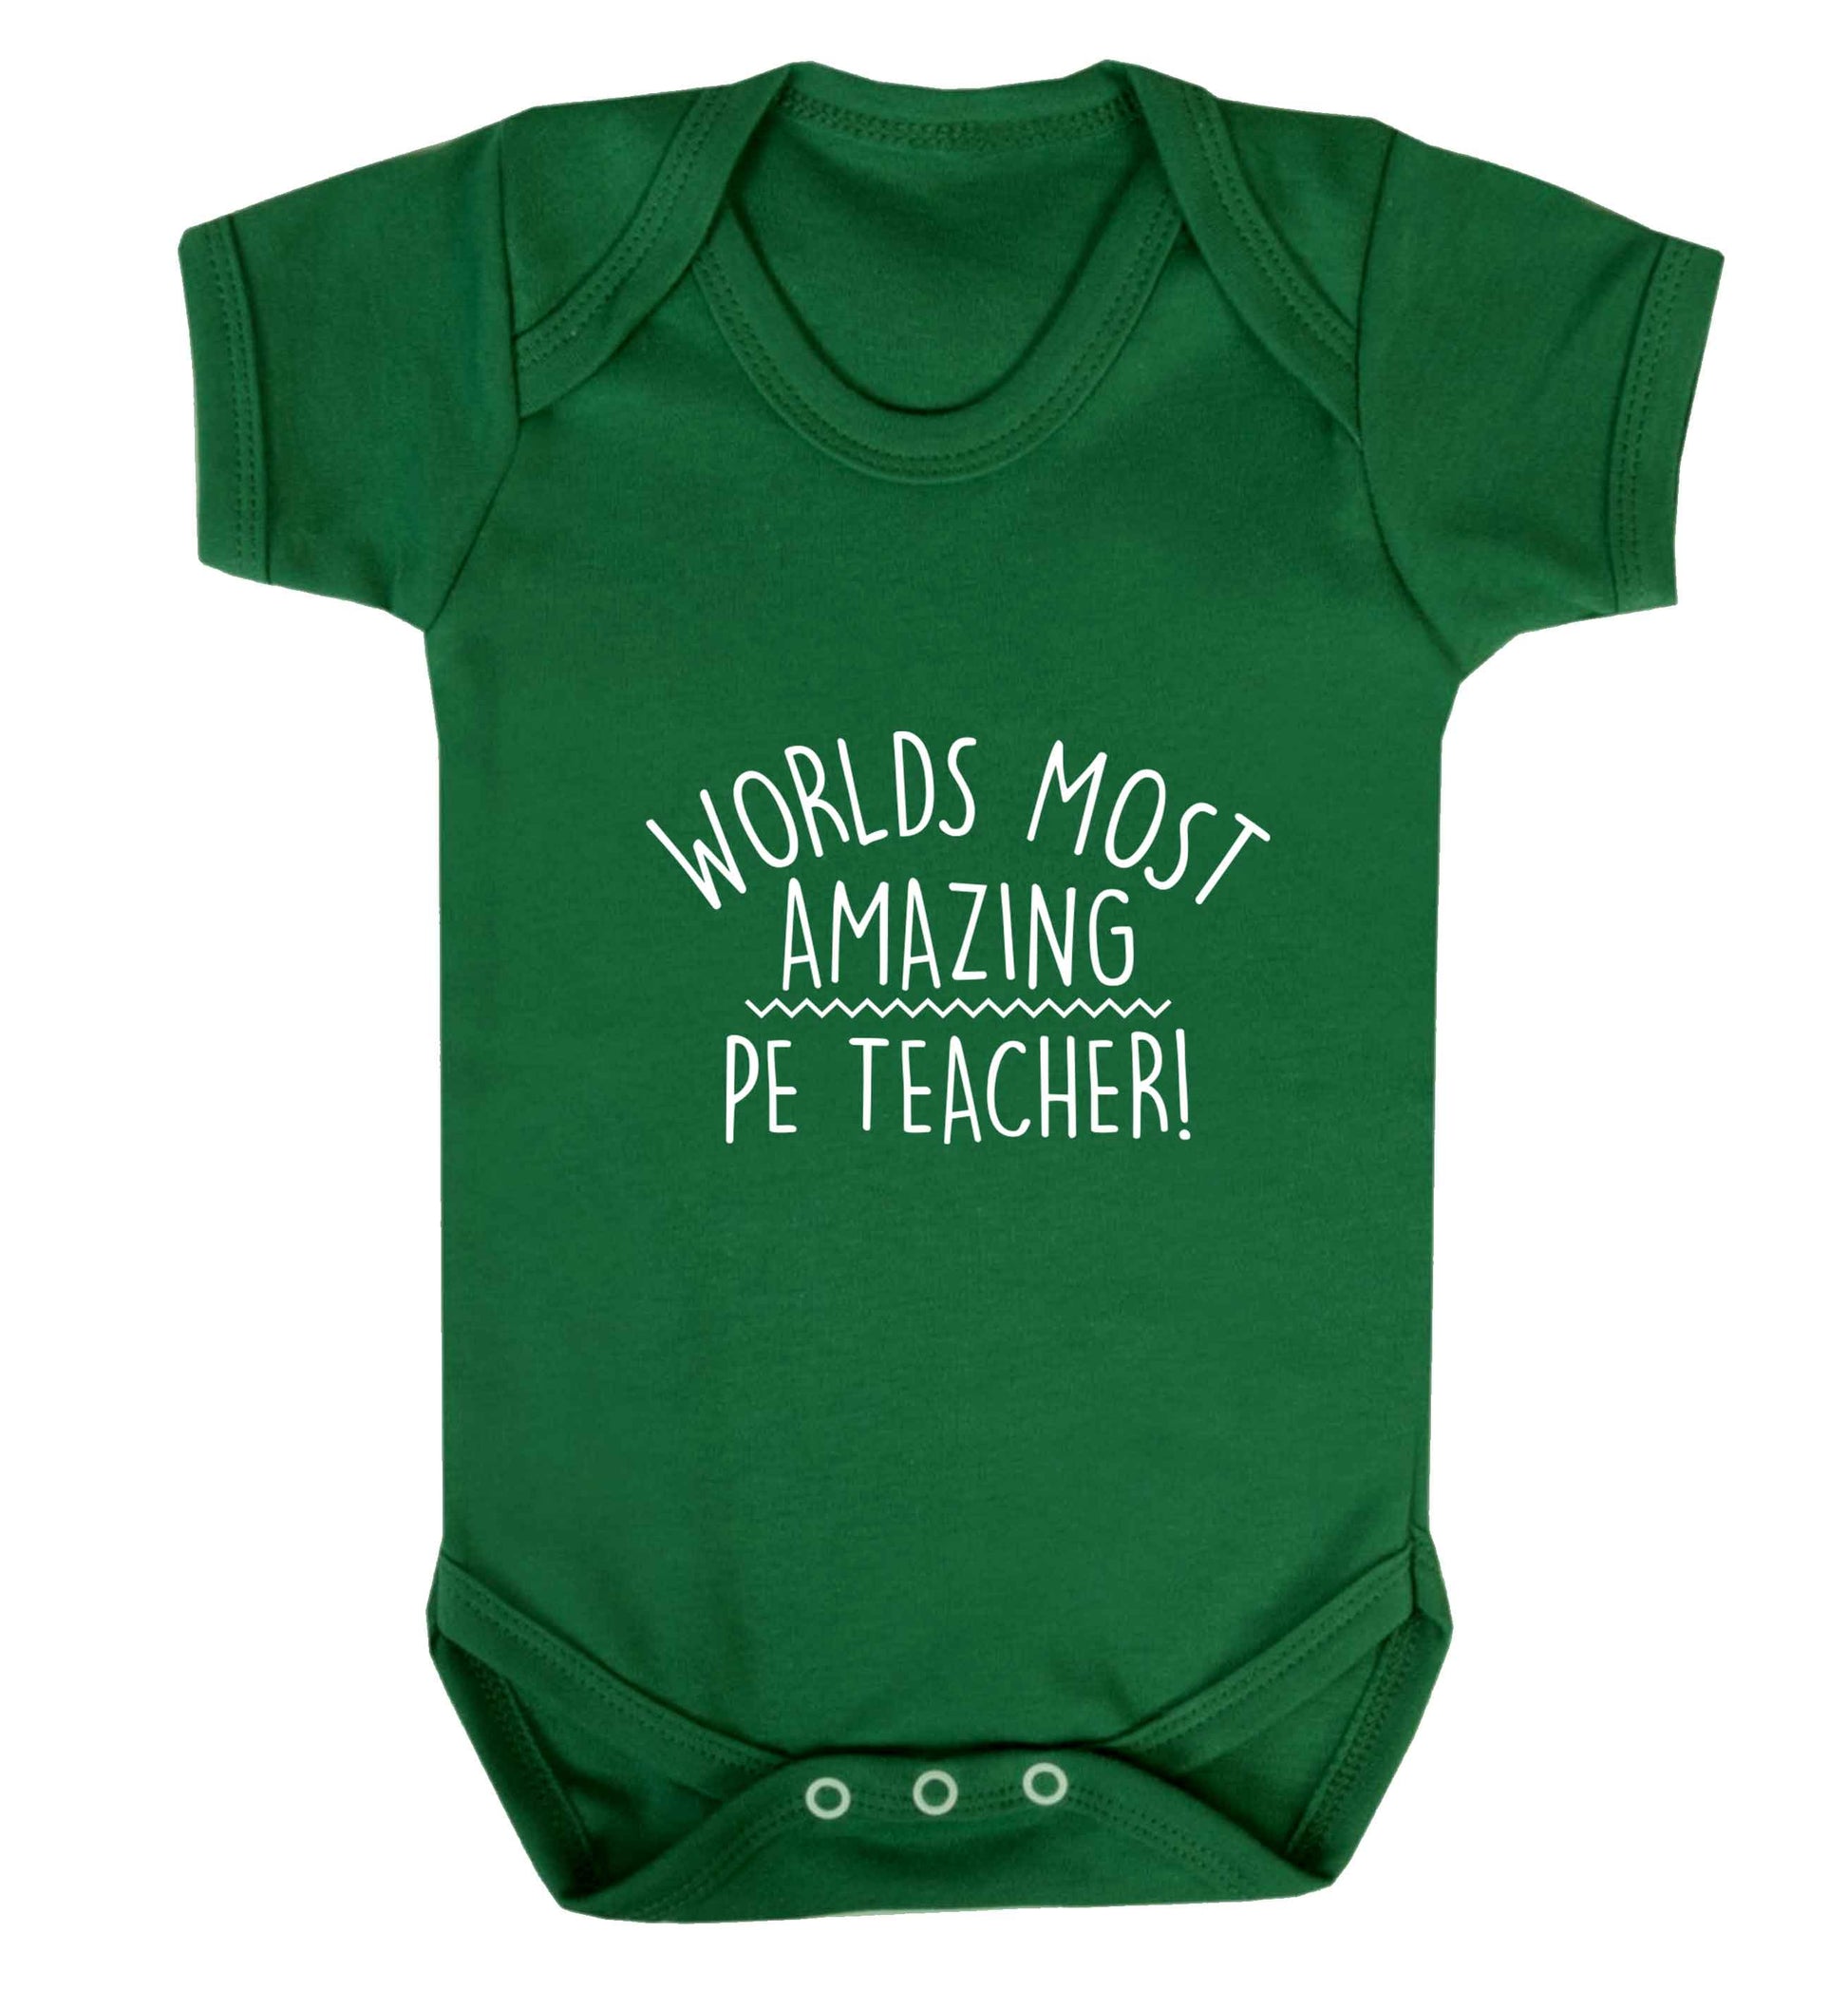 Worlds most amazing PE teacher baby vest green 18-24 months